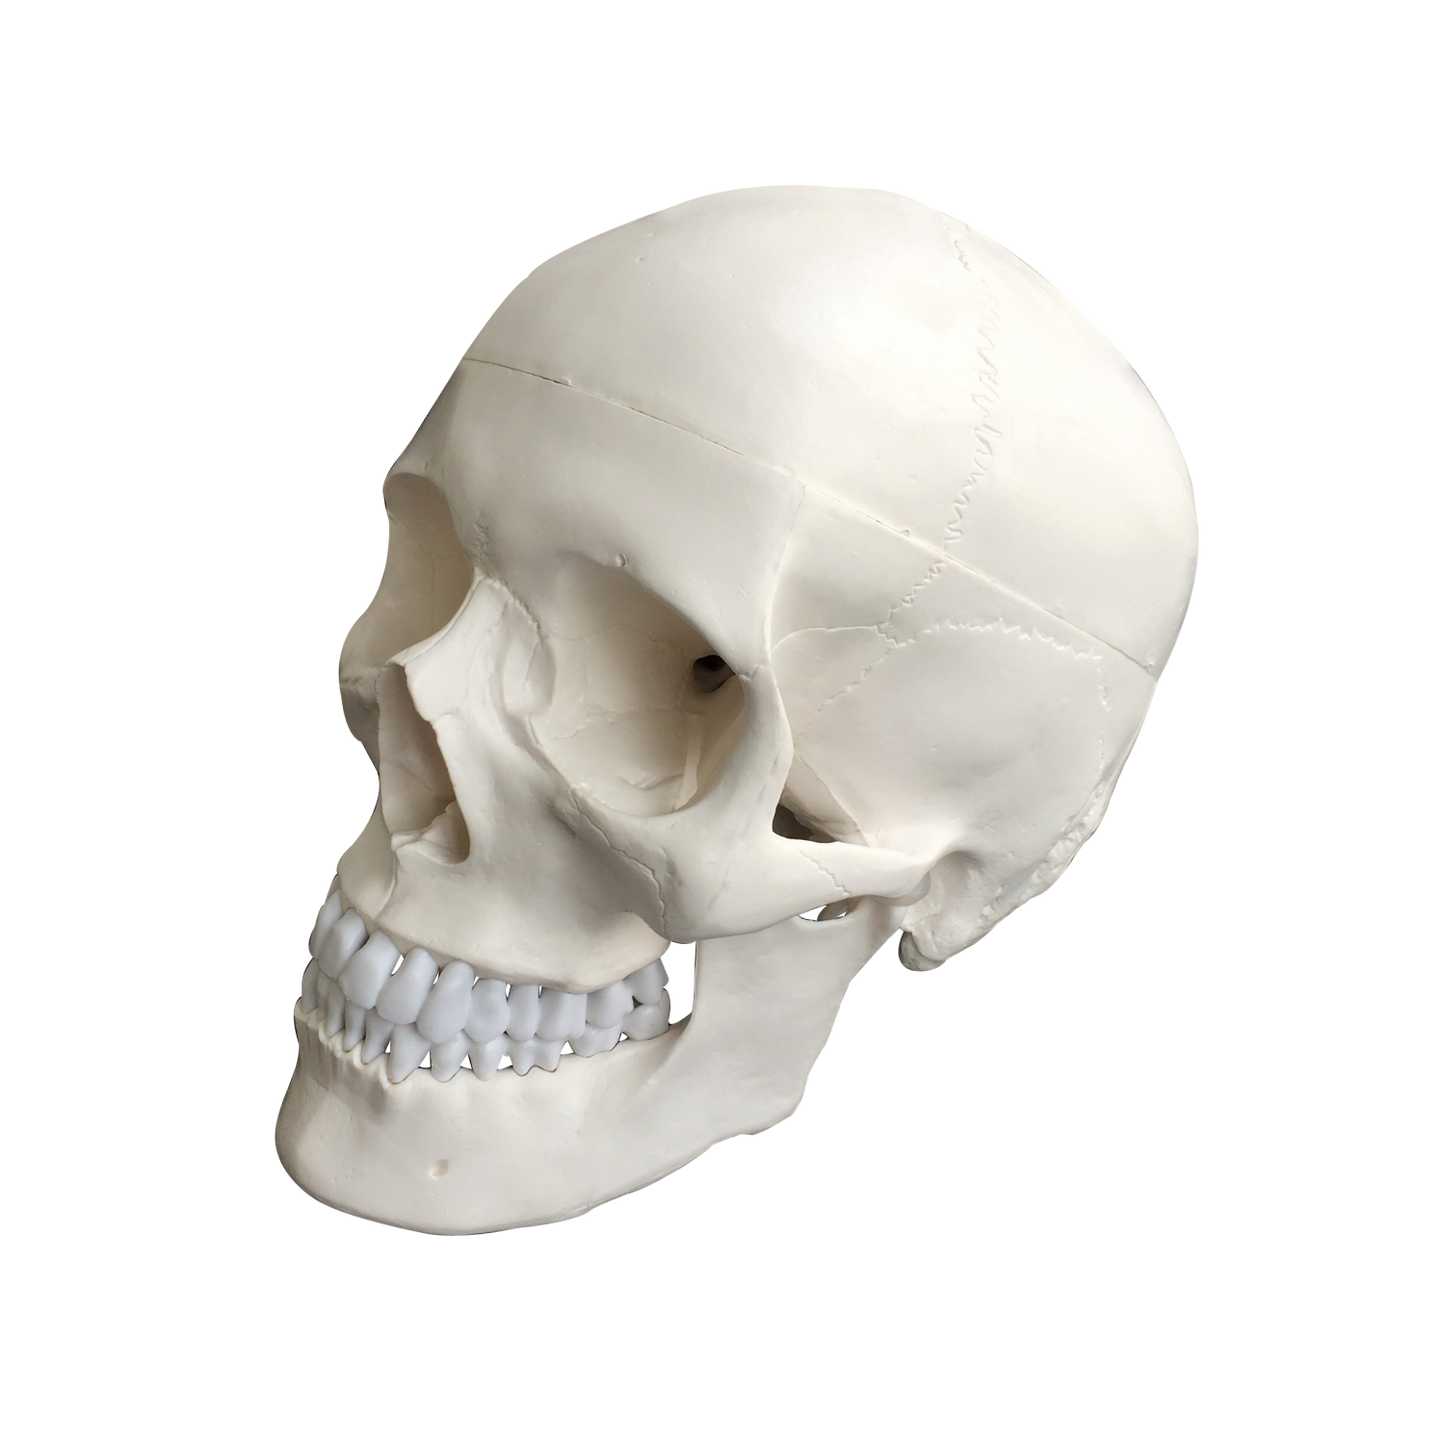 Skull model Incl. the dural septa e.g. falx cerebri from dura mater